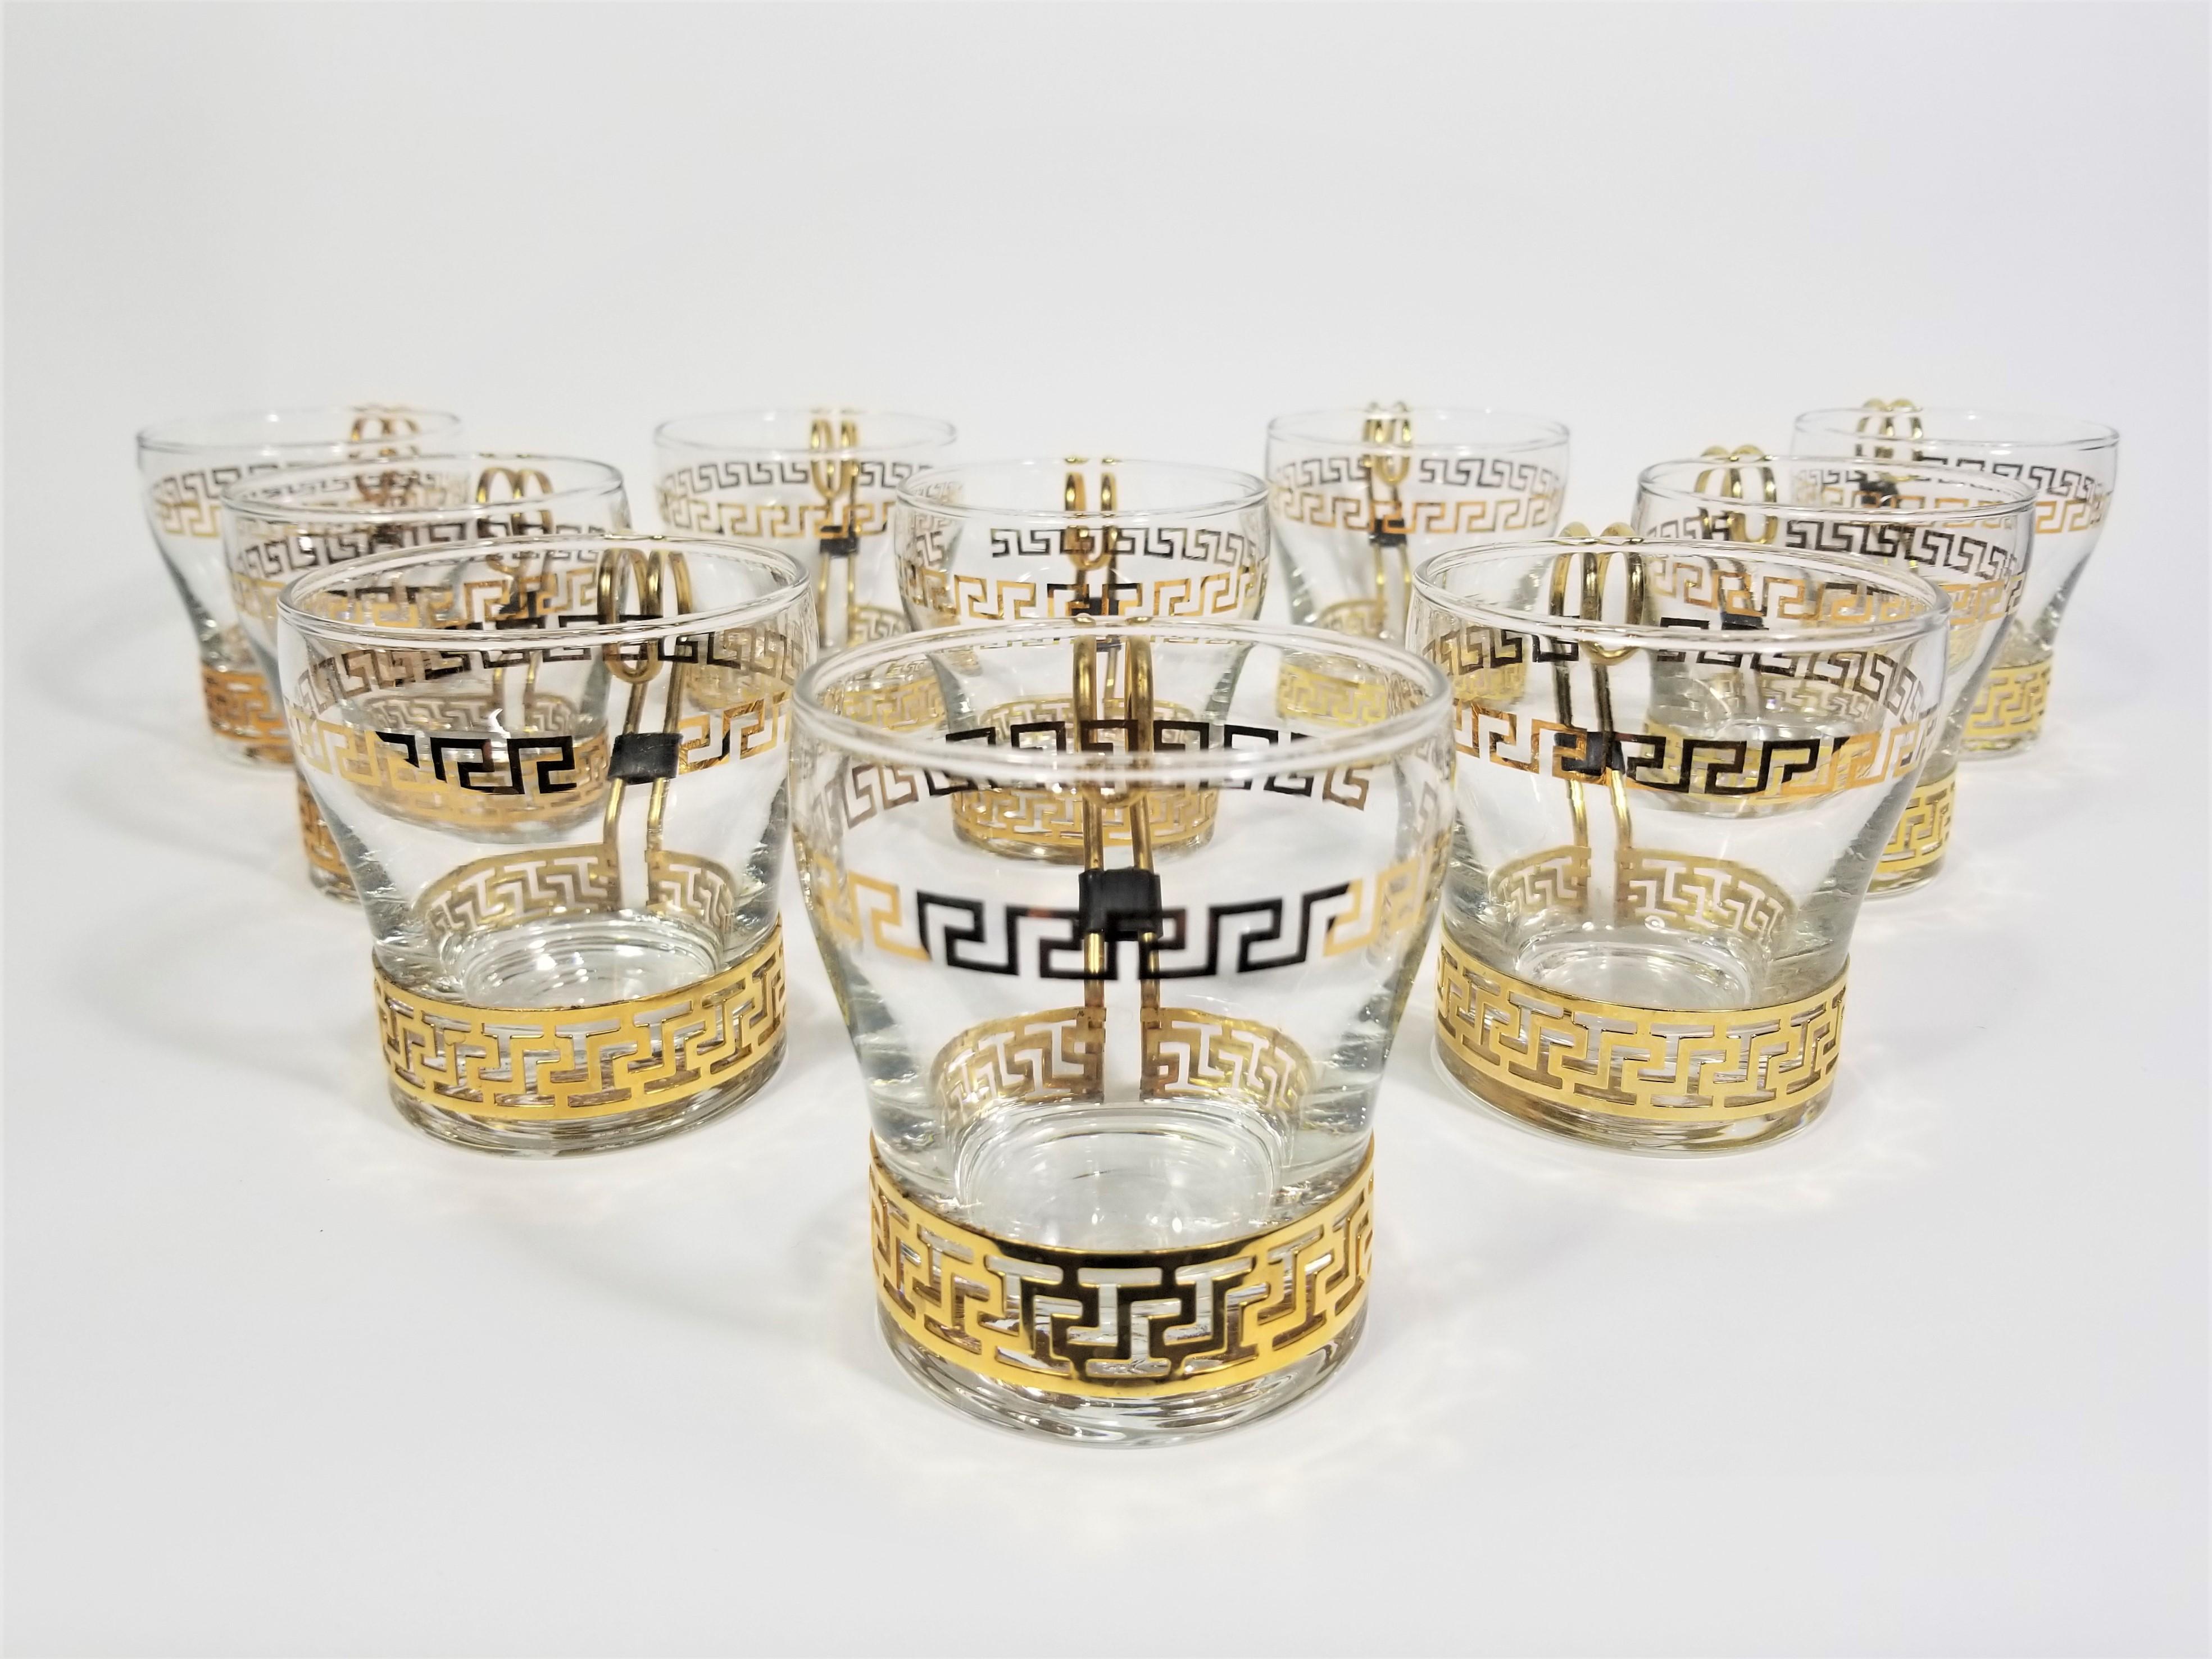 Greek Key Turkish Tea Glass Set 6 Mugs w/ Handles Gold Band Design 